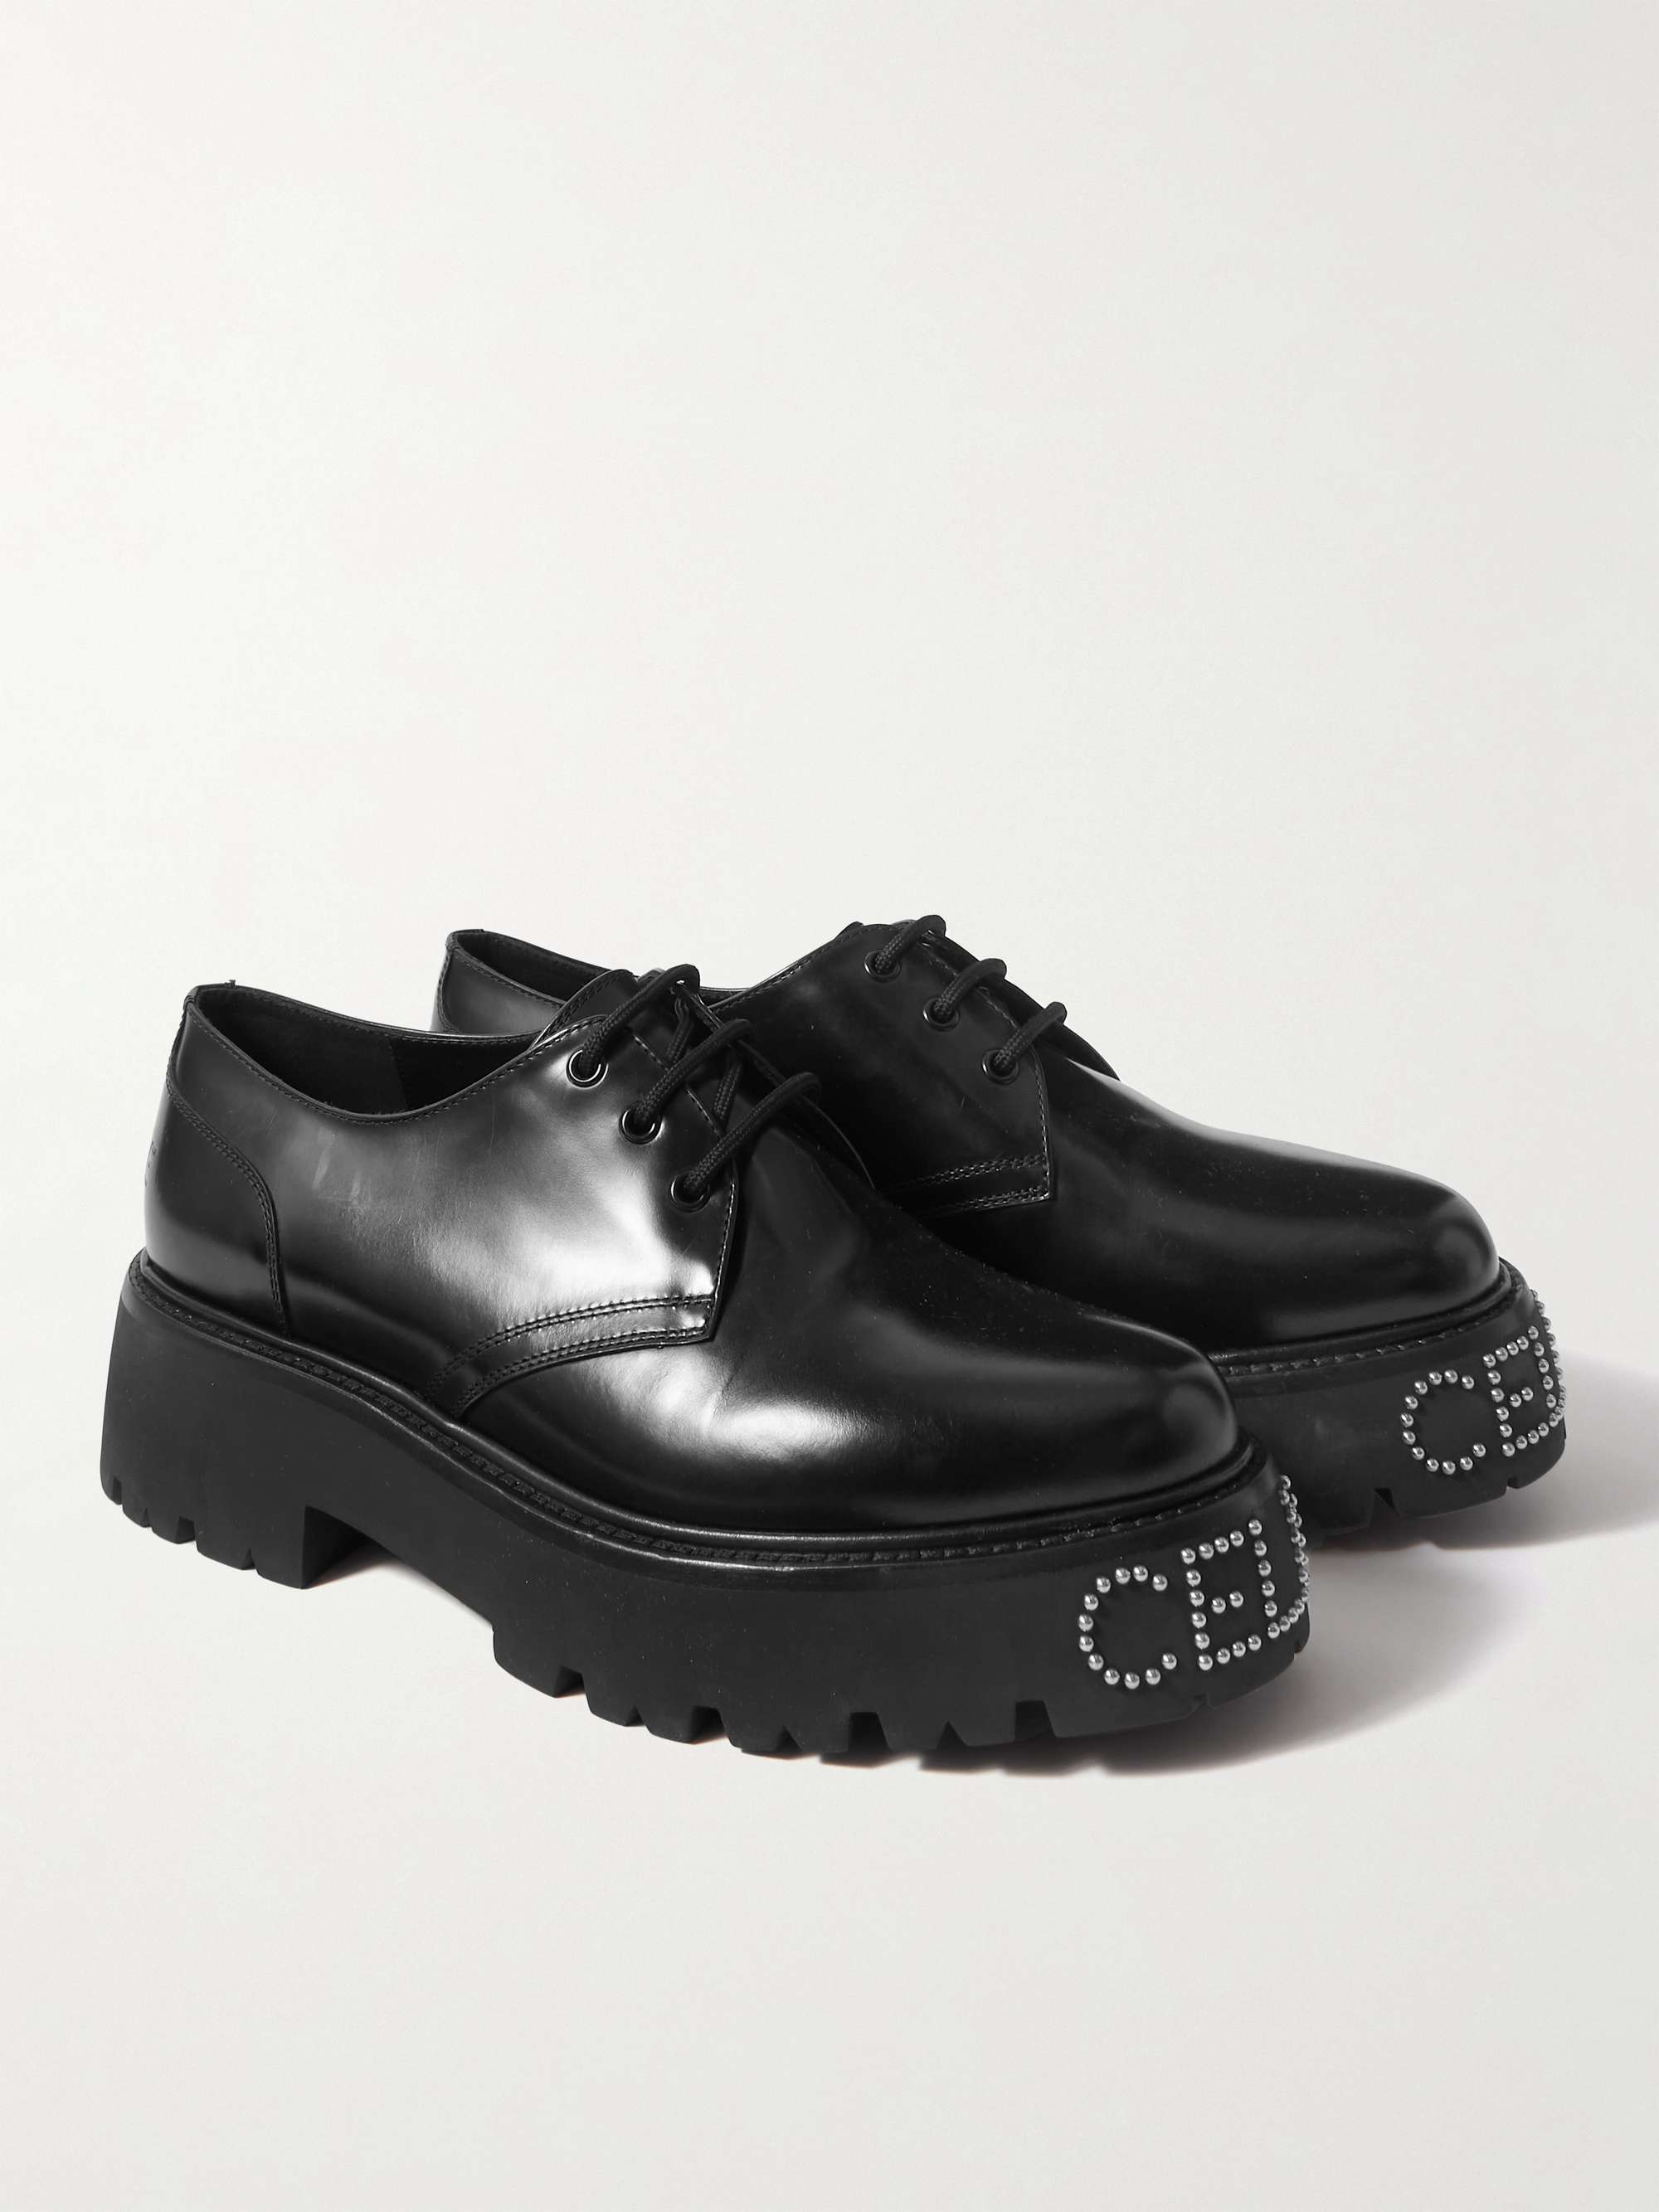 CELINE HOMME Logo-Studded Leather Derby Shoes